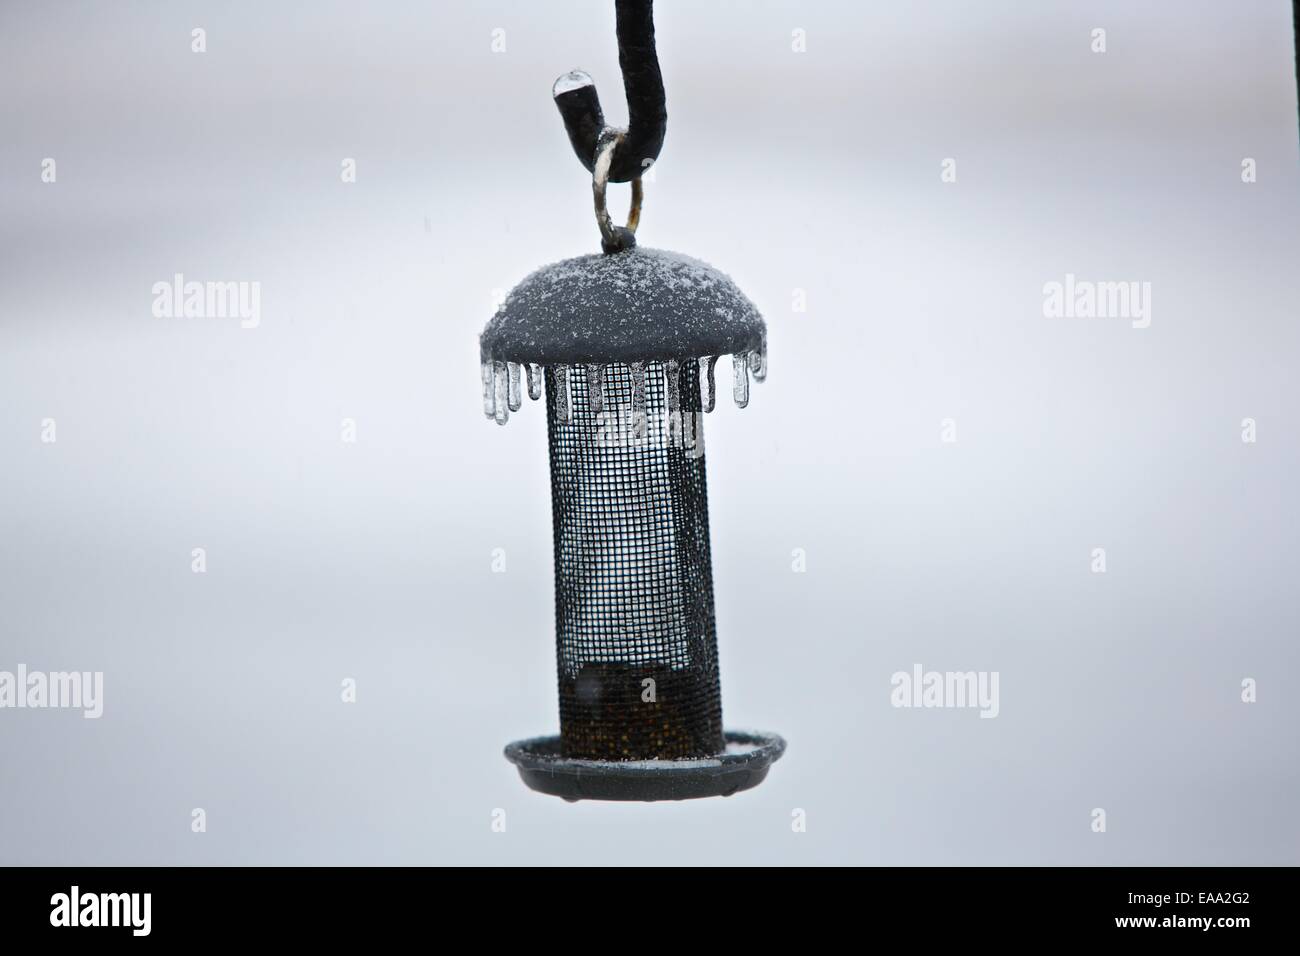 Ice on a bird feeder after freezing rain Stock Photo